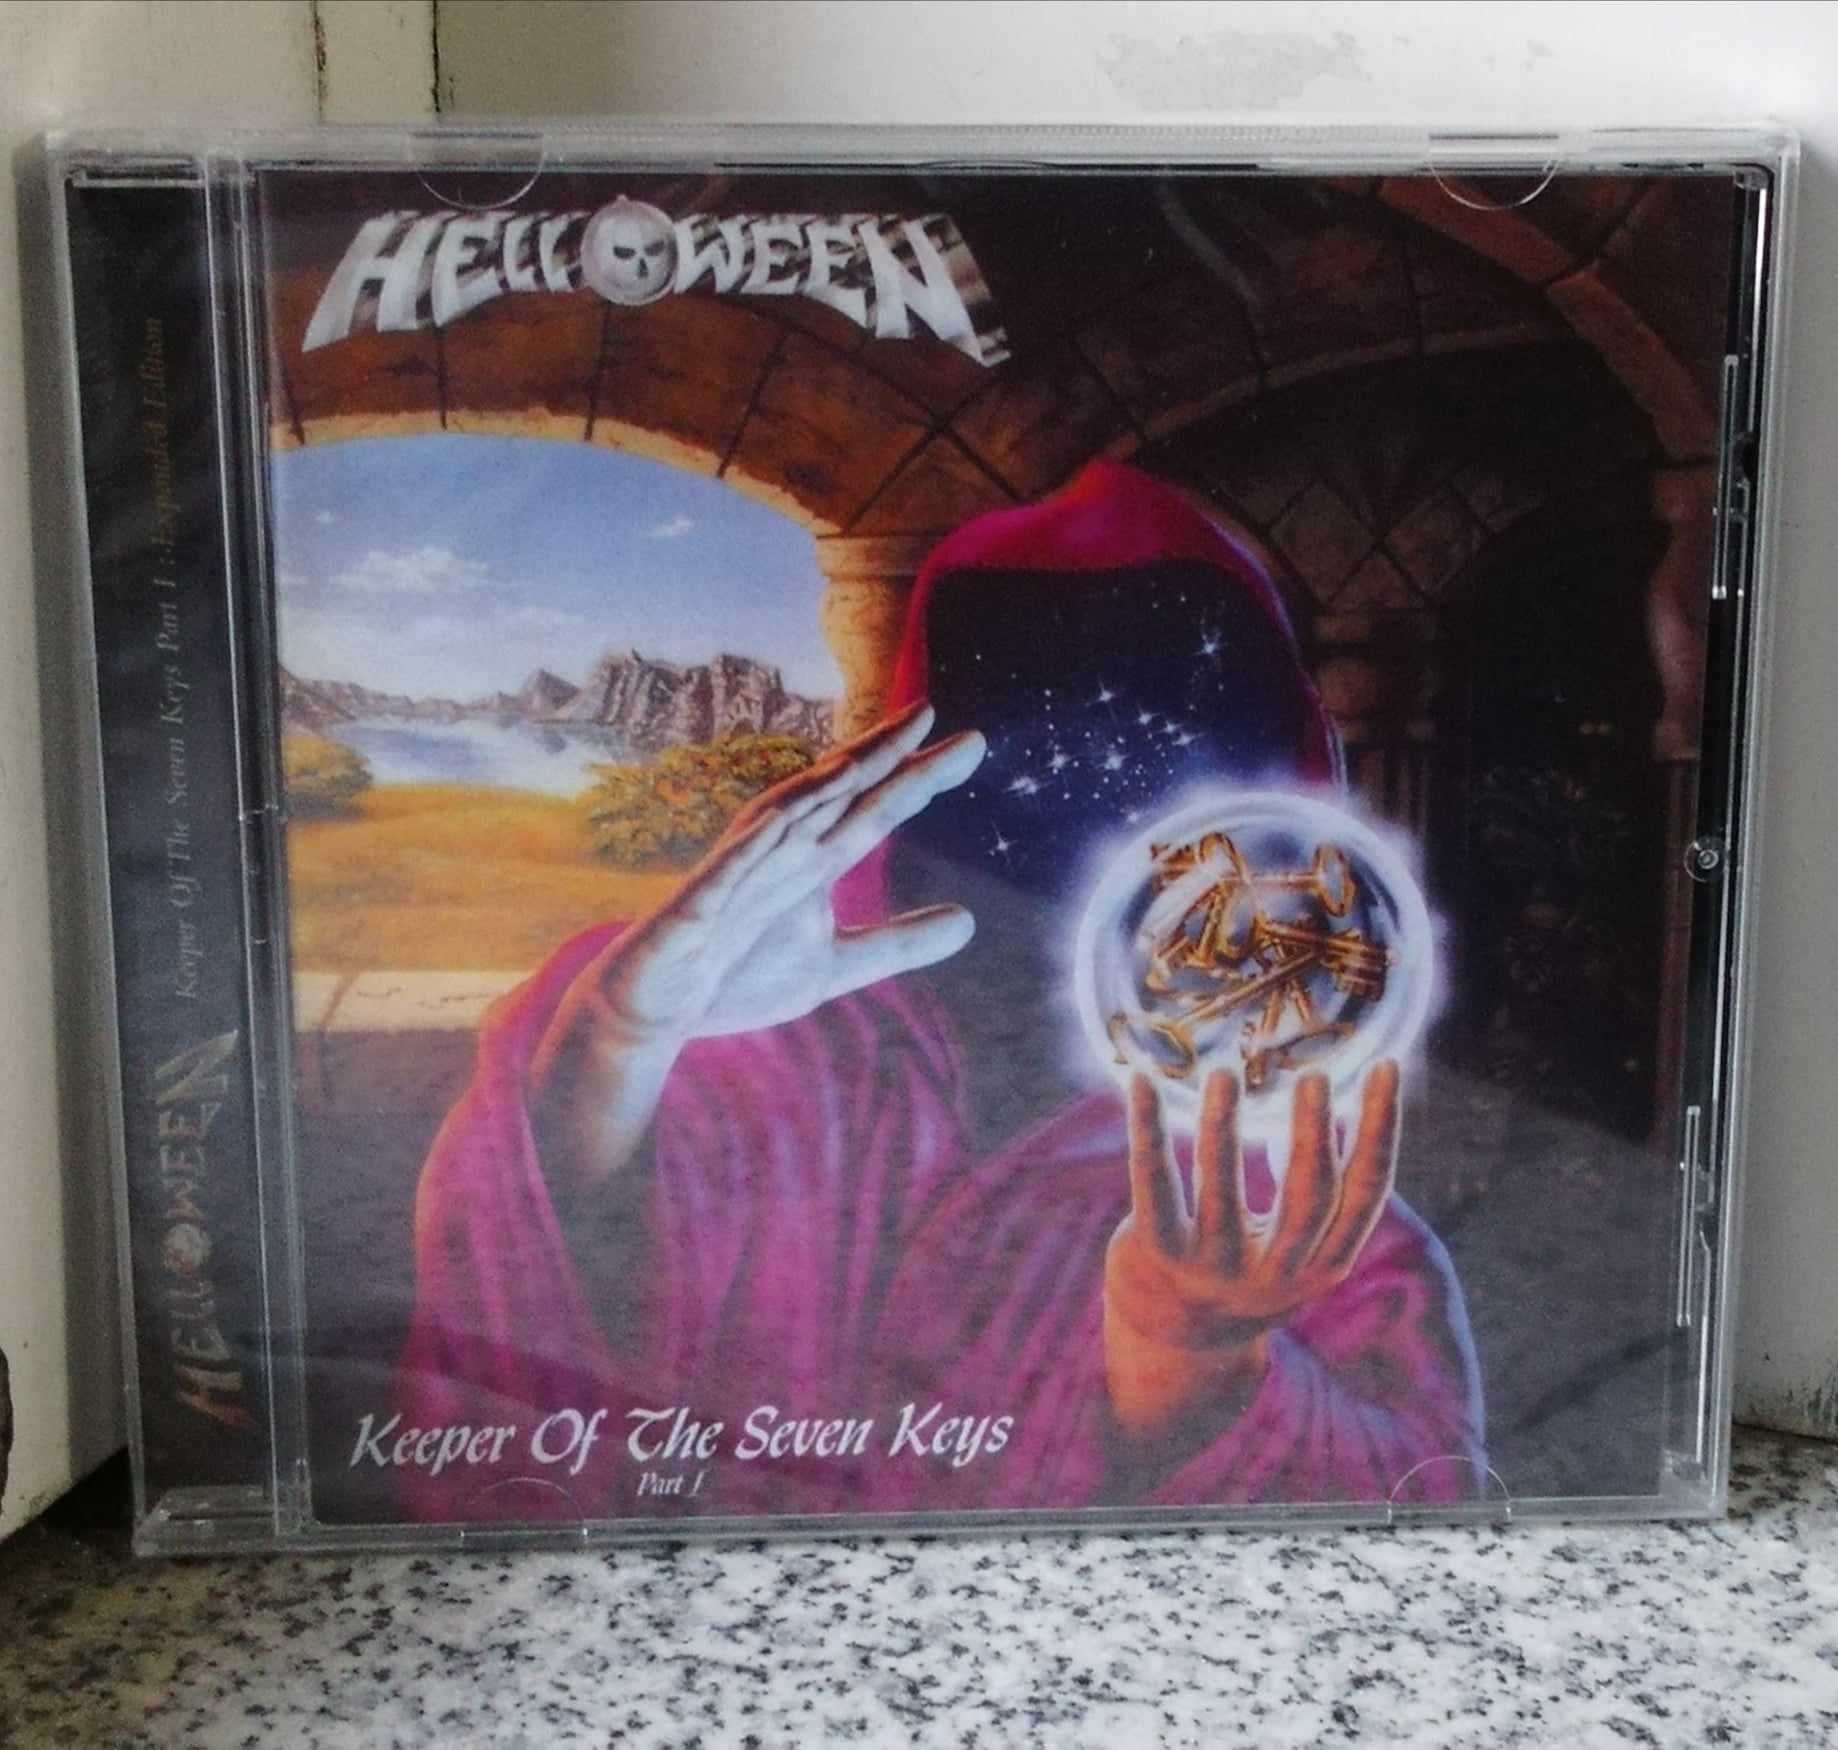 HELLOWEEN - Keeper Of The Seven Keys ( Part I ) - cd novo